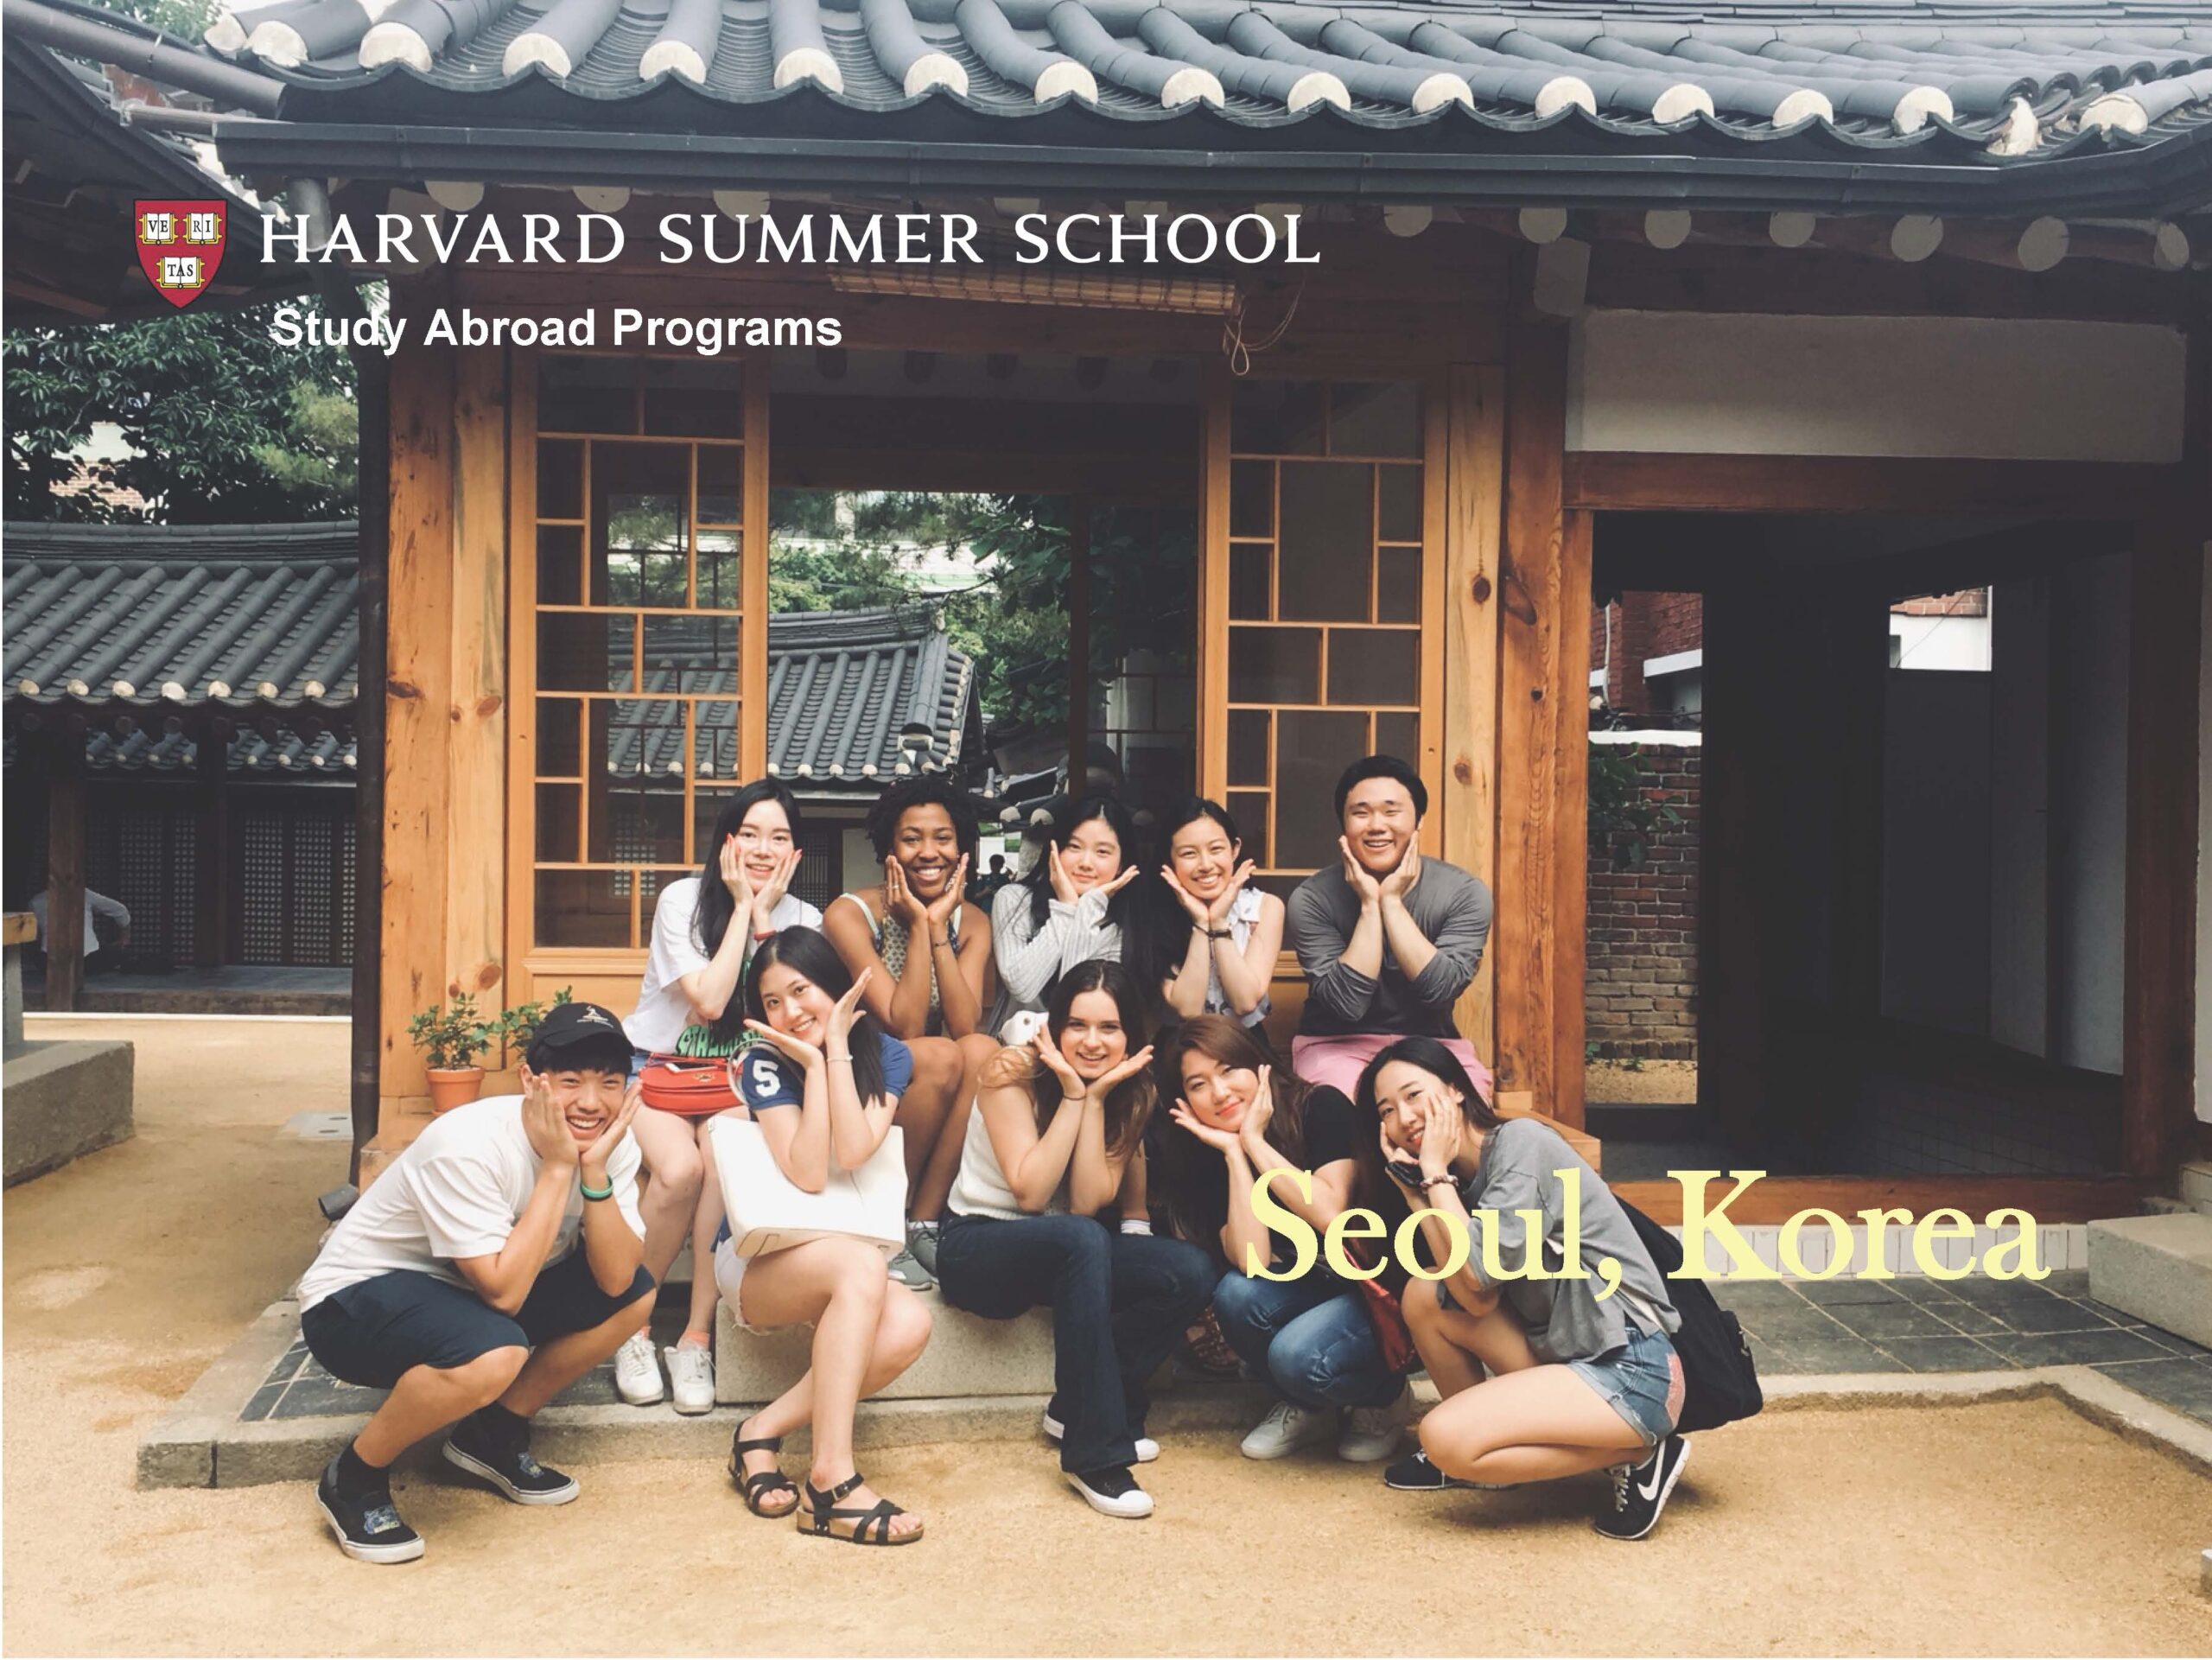 Seoul, Korea - Harvard Summer School